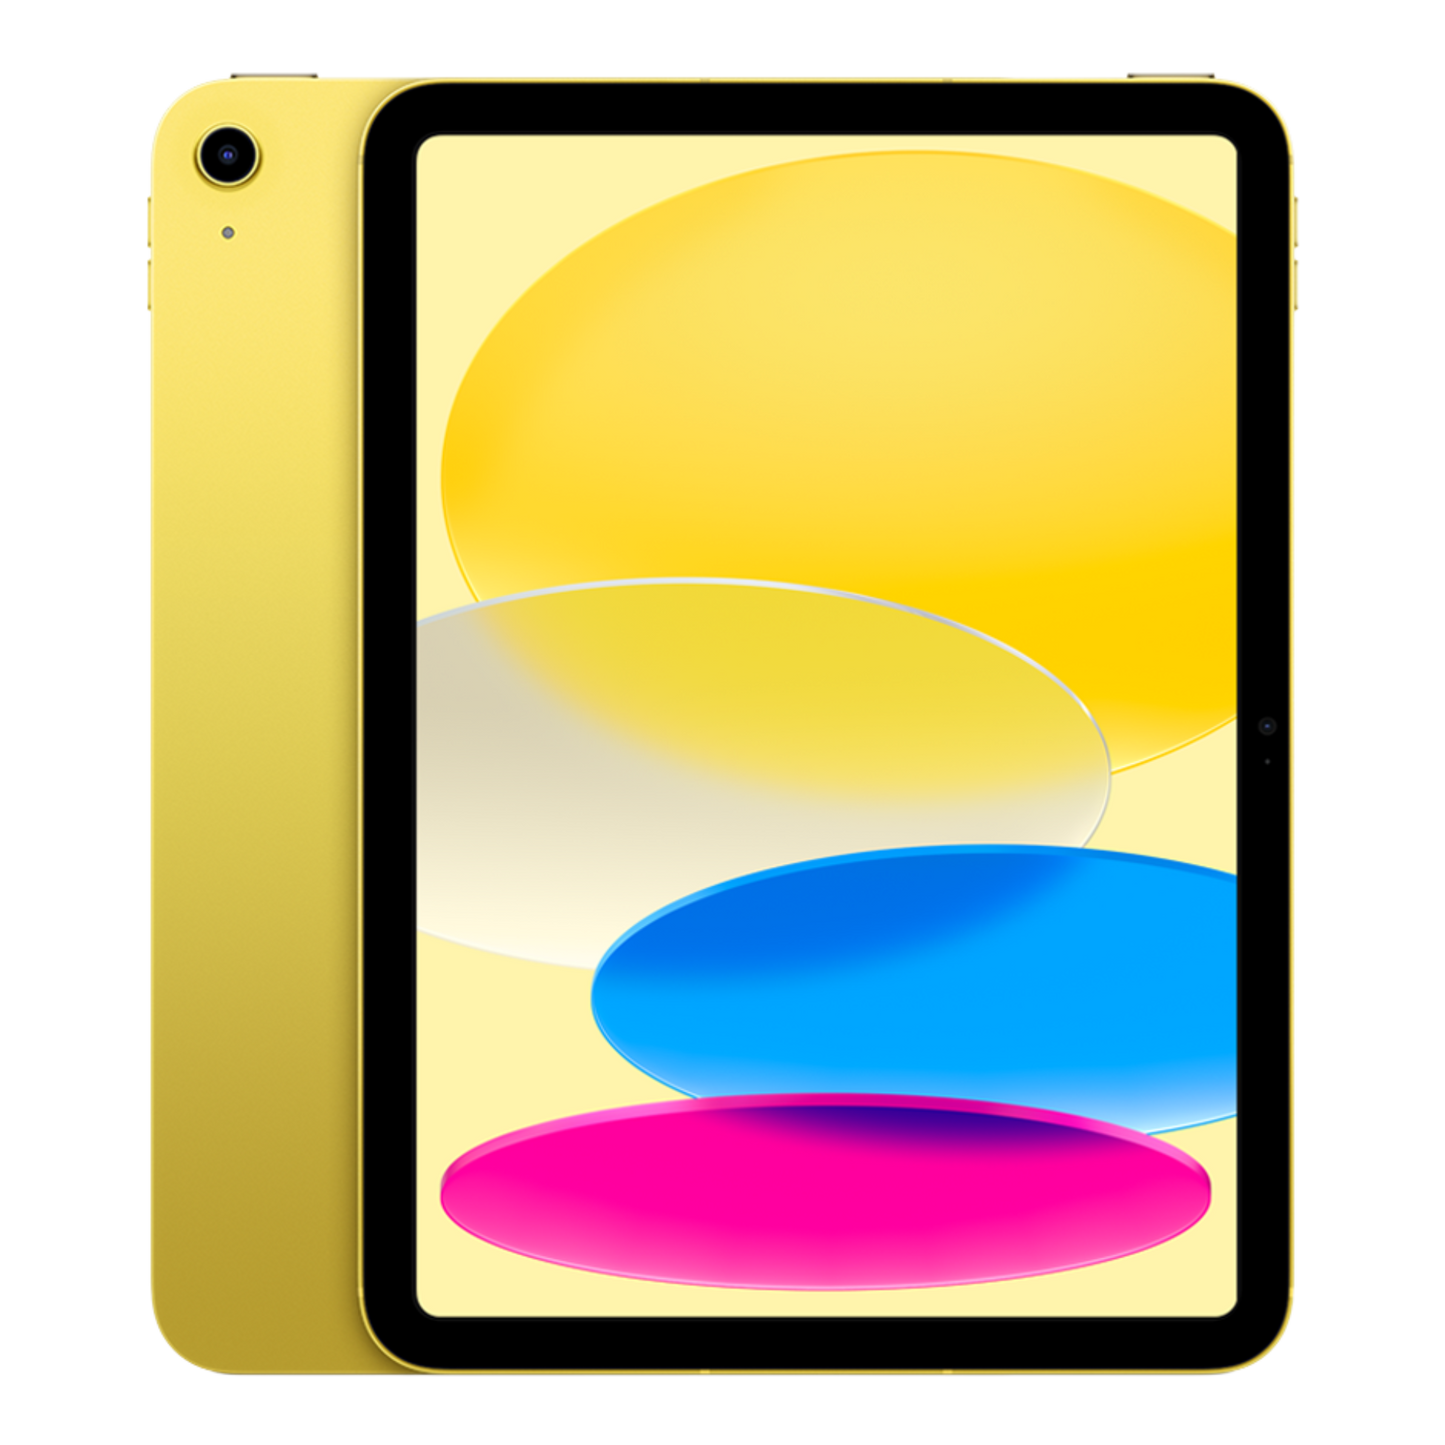 iPad (10th Generation) - Pink